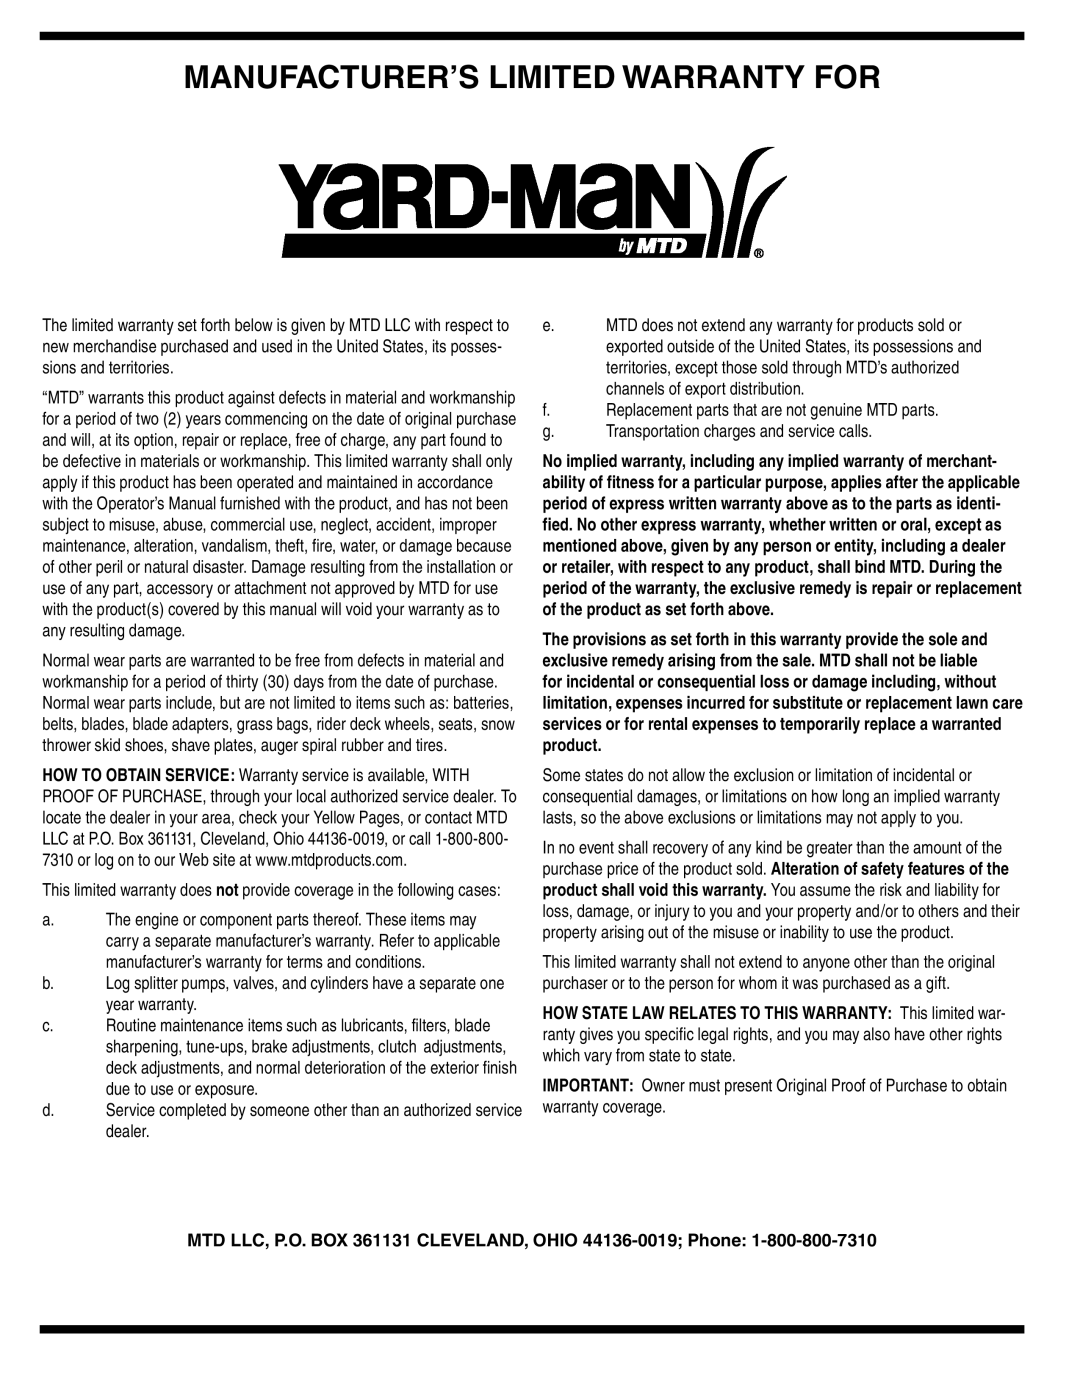 Yard-Man 829 warranty Manufacturer’S Limited Warranty For, MTD LLC, P.O. BOX 361131 CLEVELAND, OHIO 44136-0019 Phone 